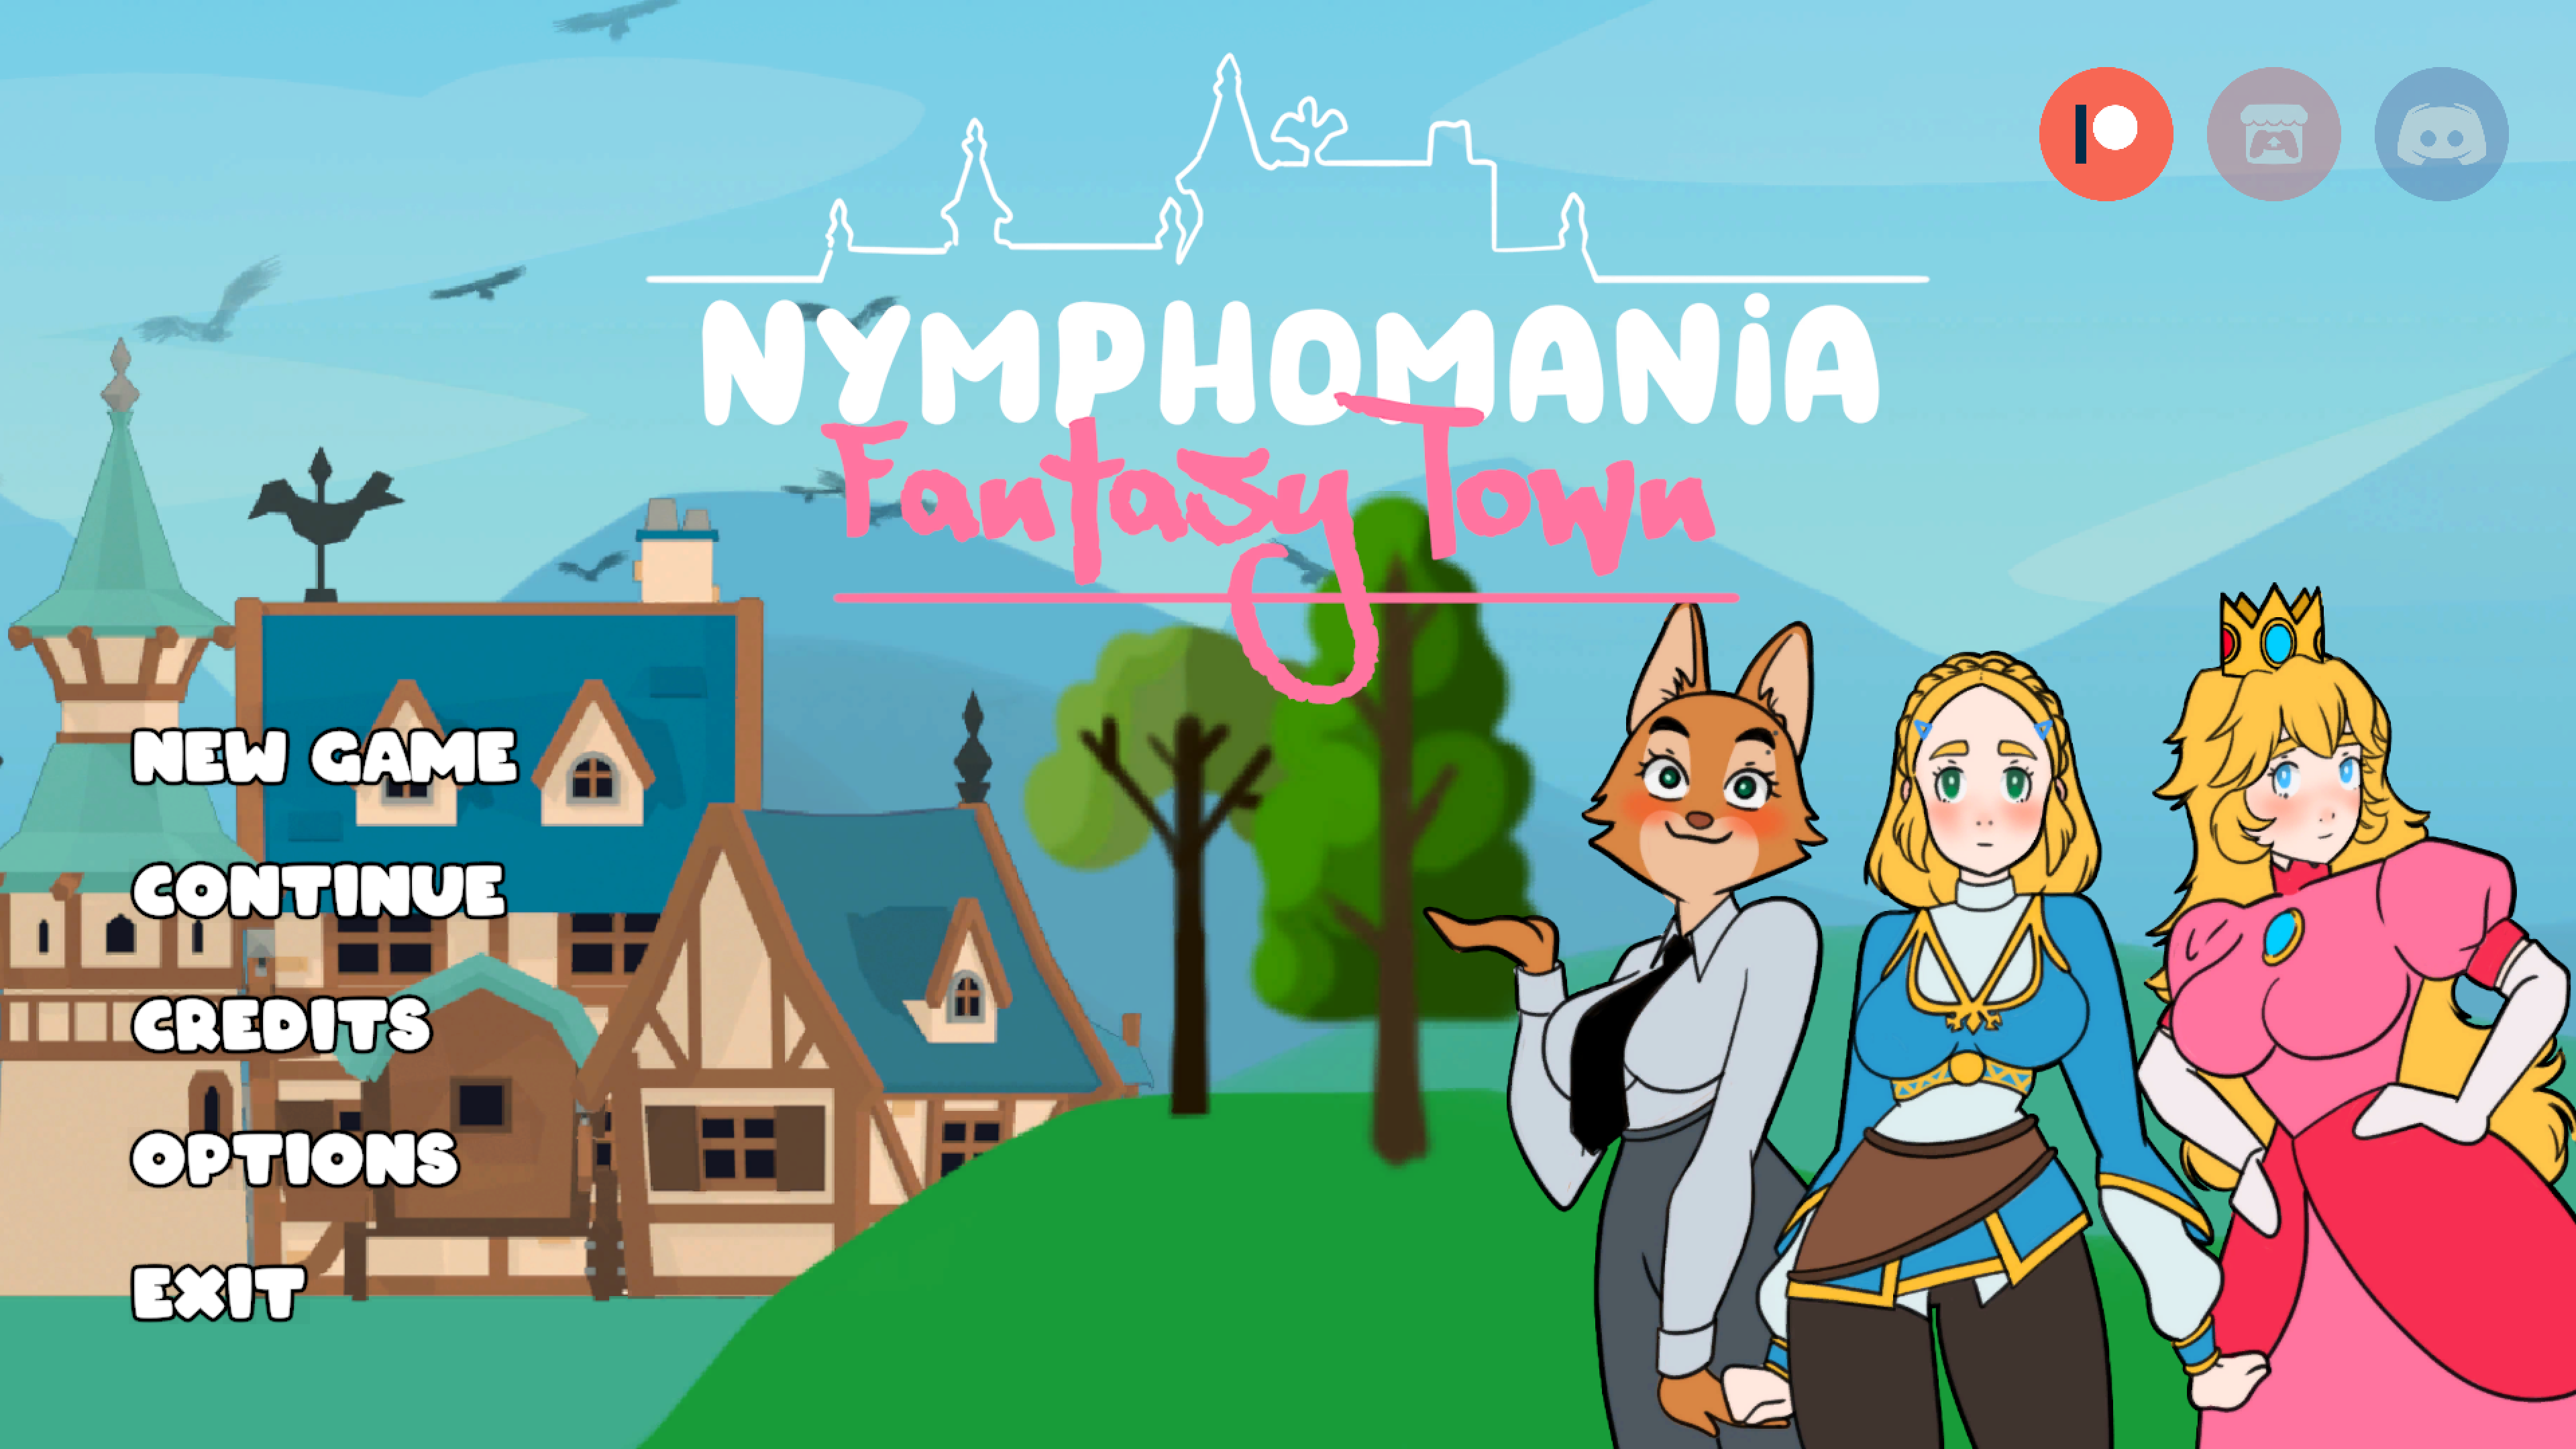 Nymphomania game